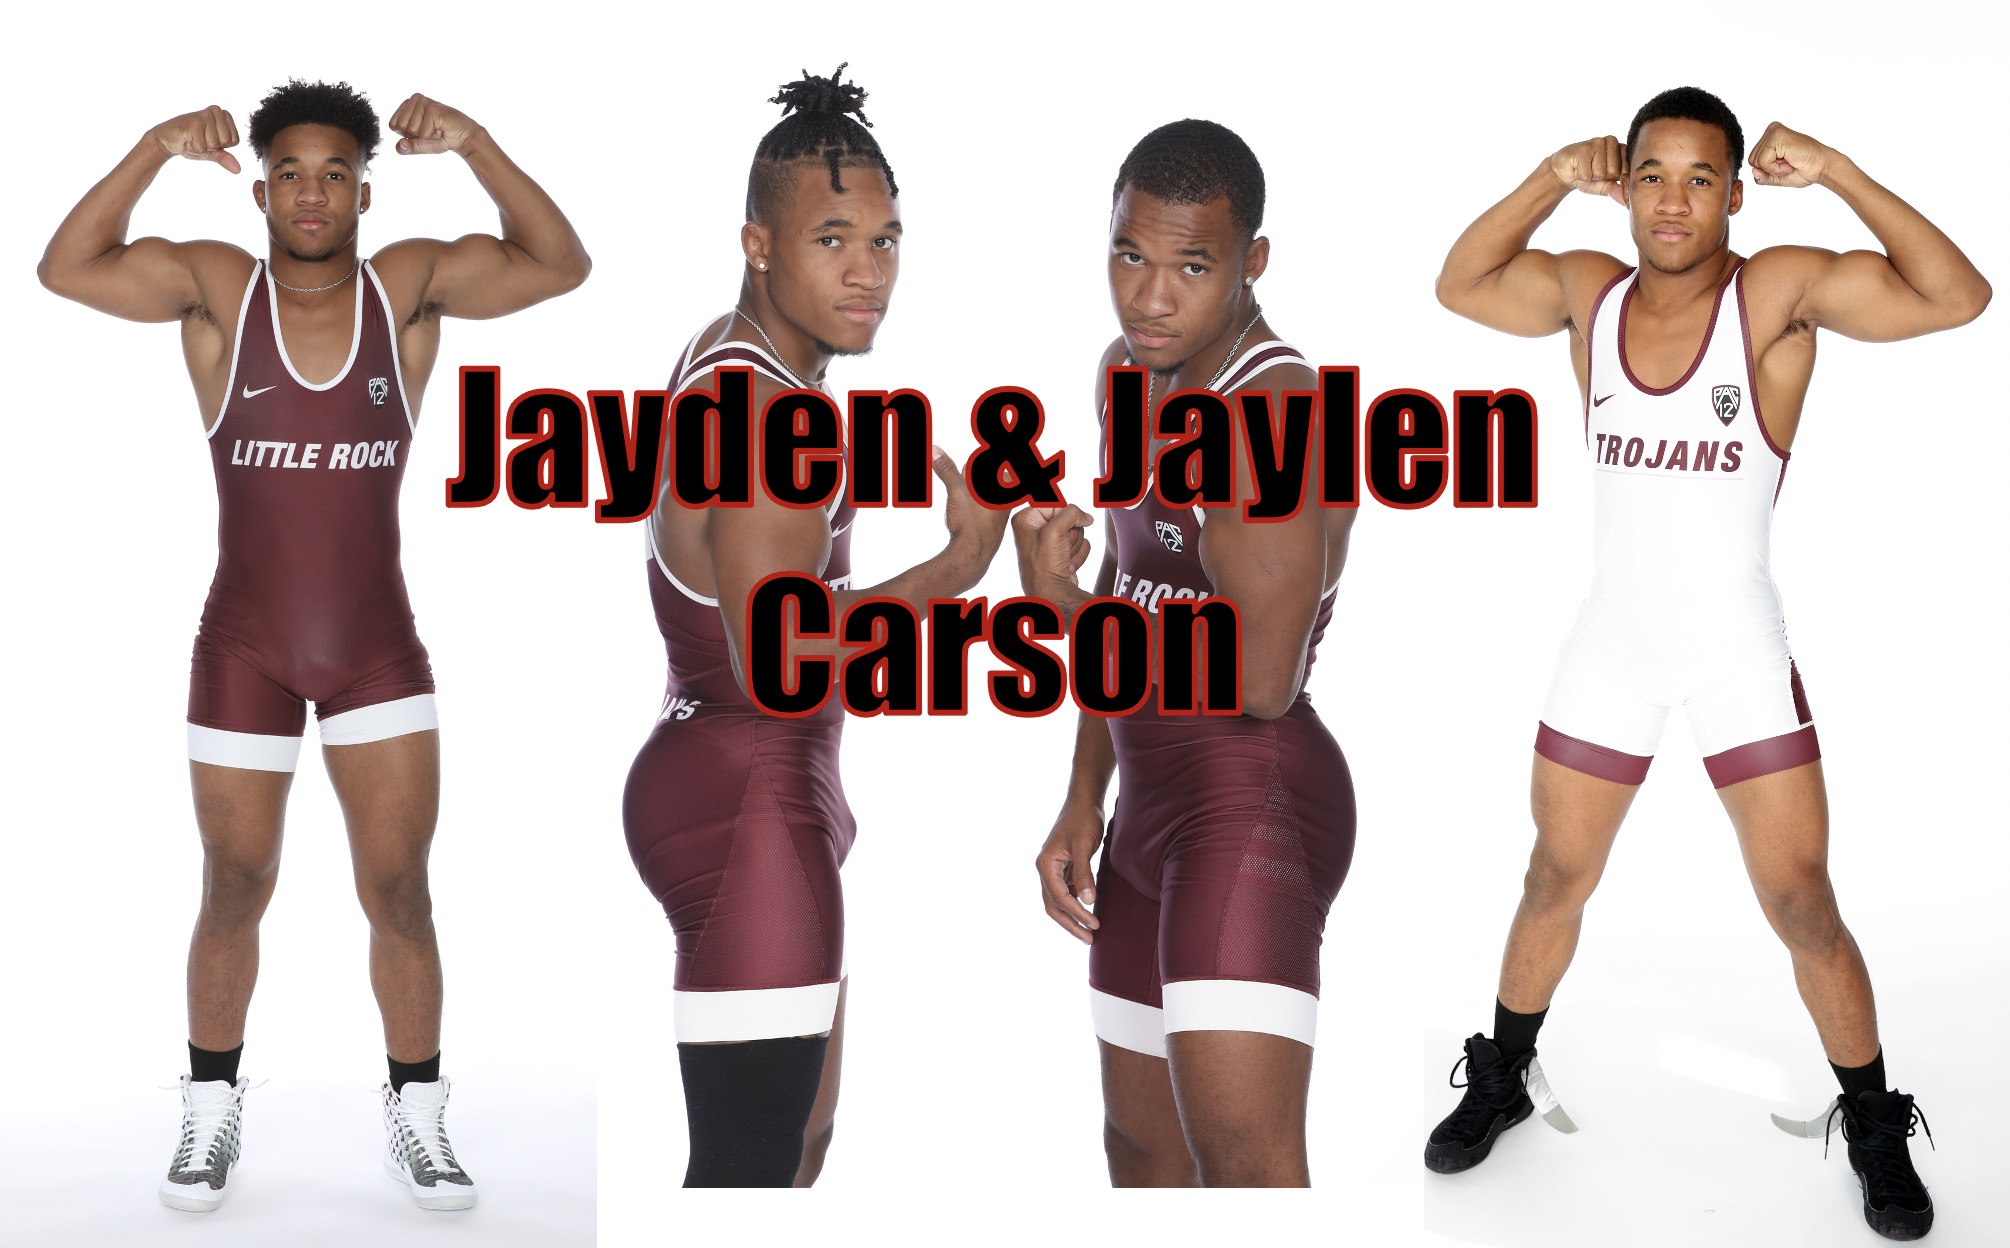 Wrestling Cum Tribute - Jayden & Jaylen Carson